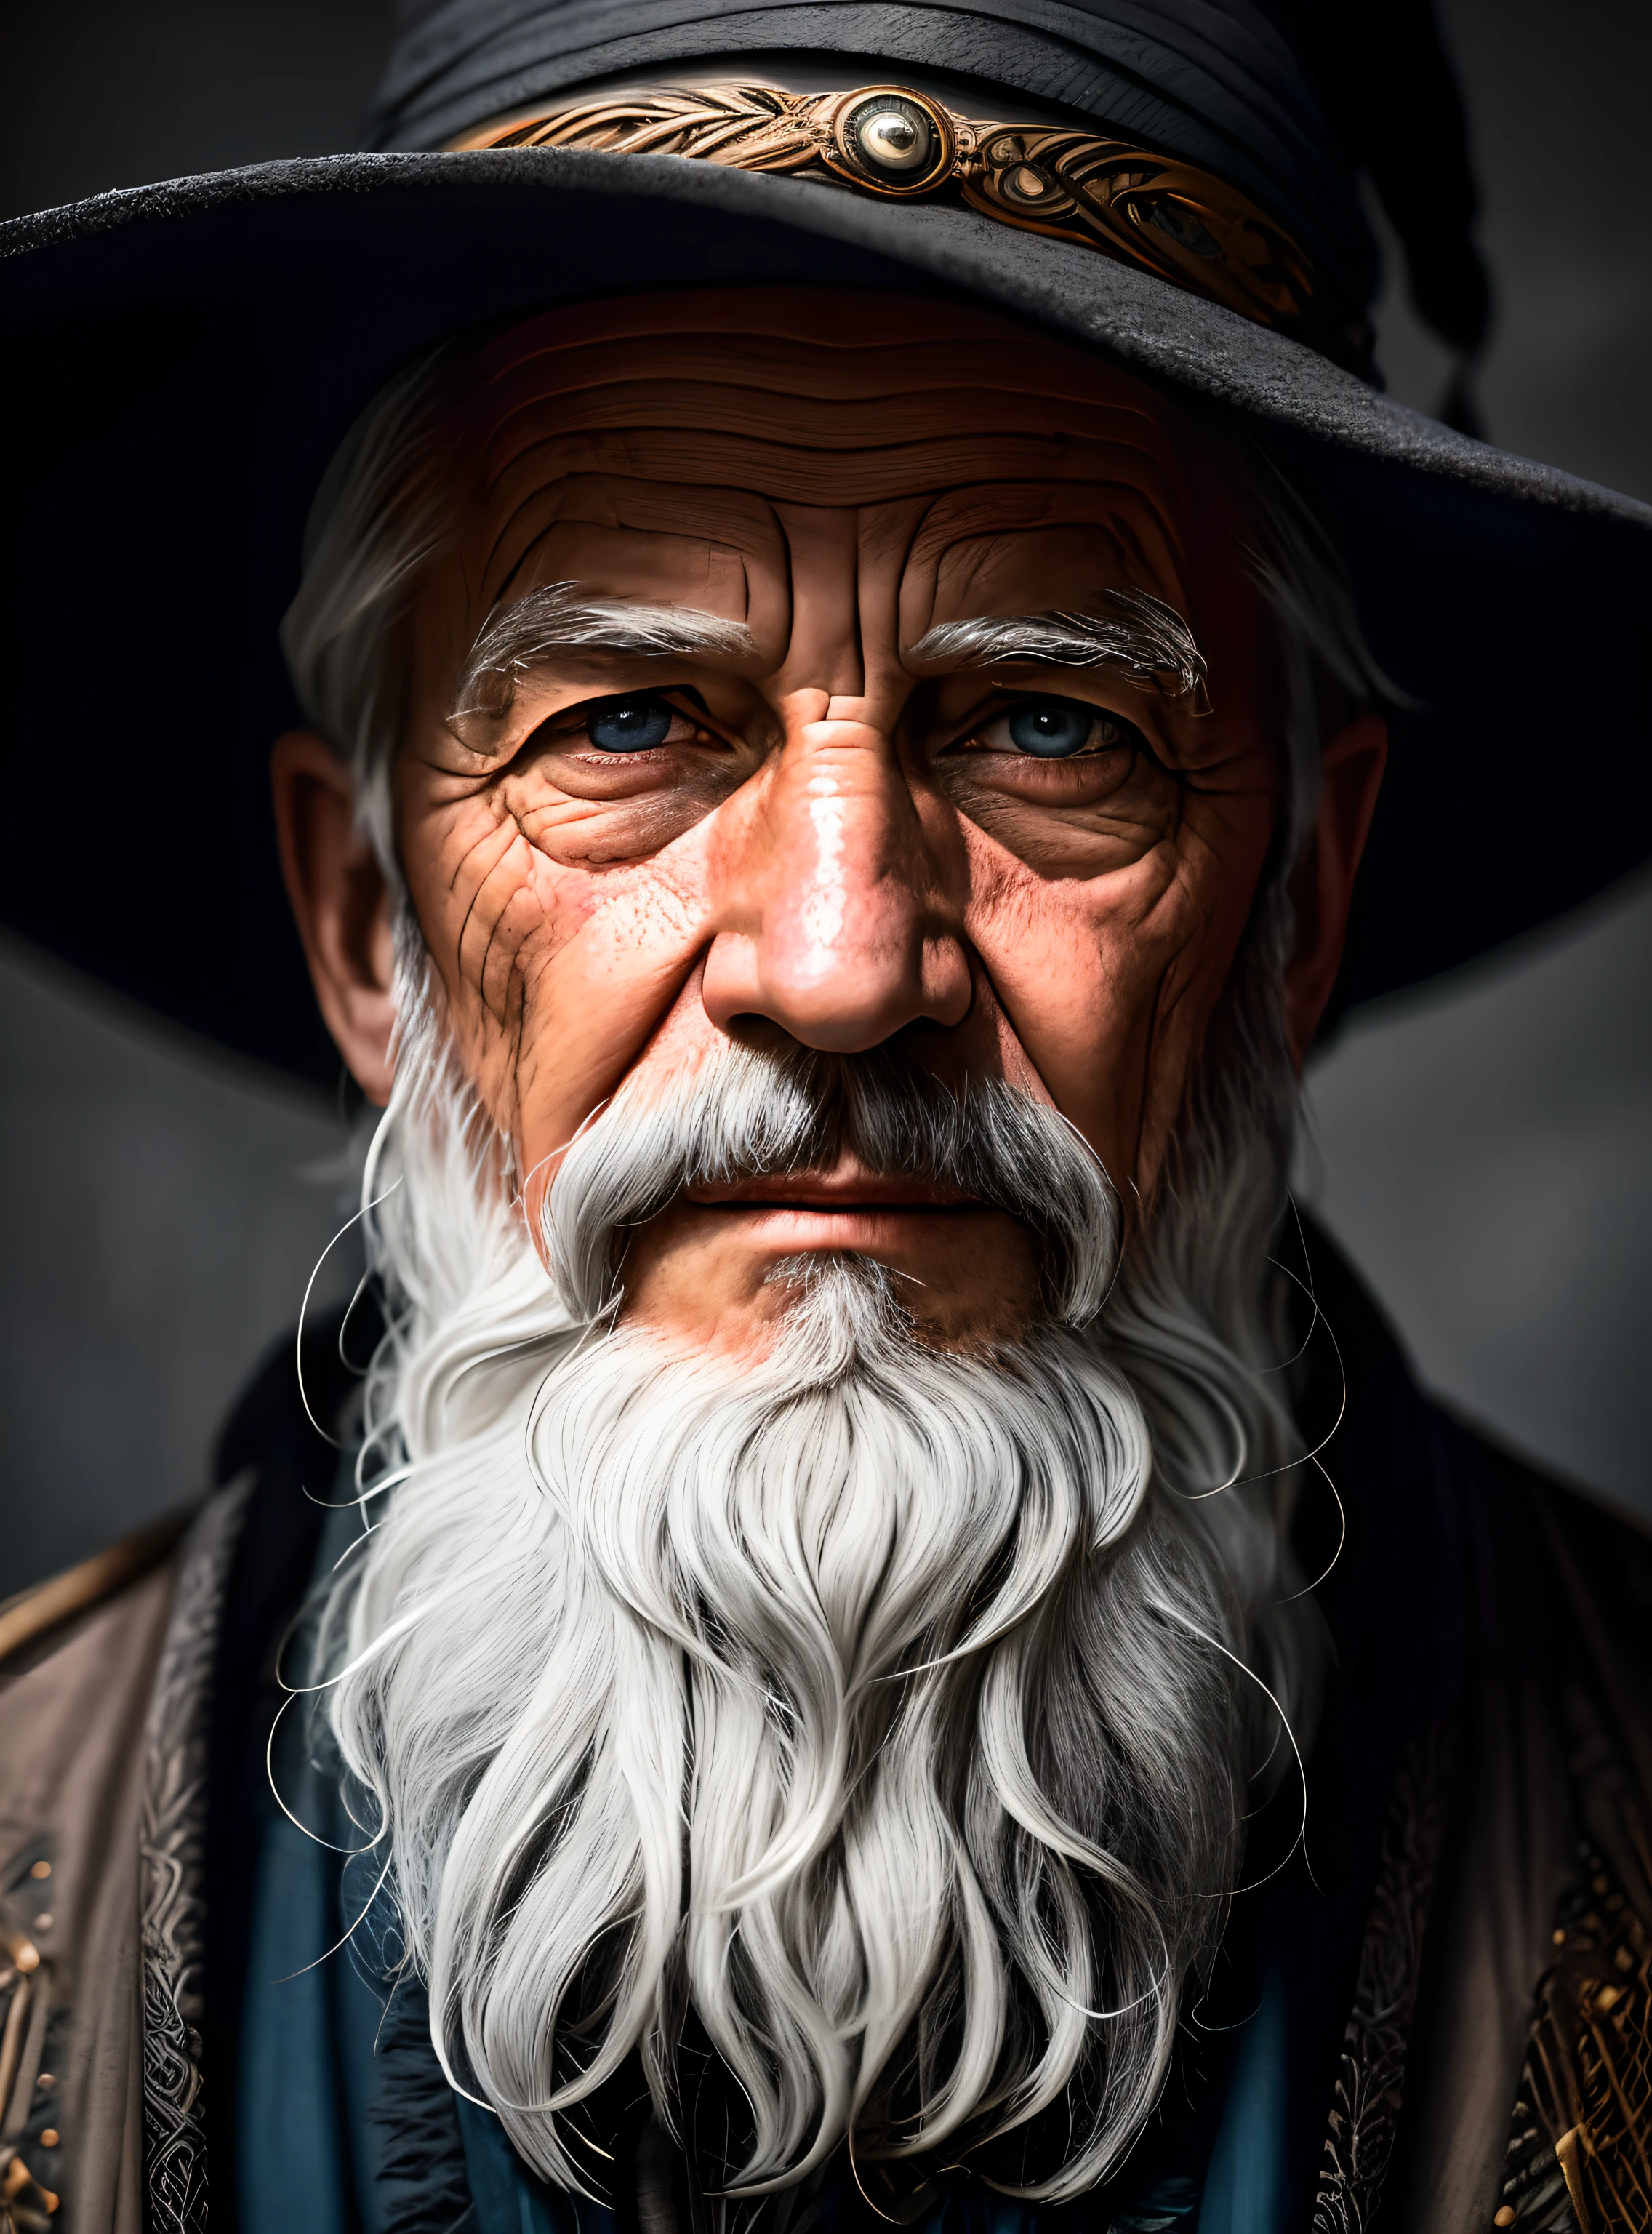 A portrait o에프 a wizard, 수염이 있는, 주름진, 풍화, 날카로운 눈으로, detailed 에프ace, 높은 세부 사항, 사진술, 어두운 스튜디오, 림 라이트, 니콘 D850, 50mm, 에프/1.4